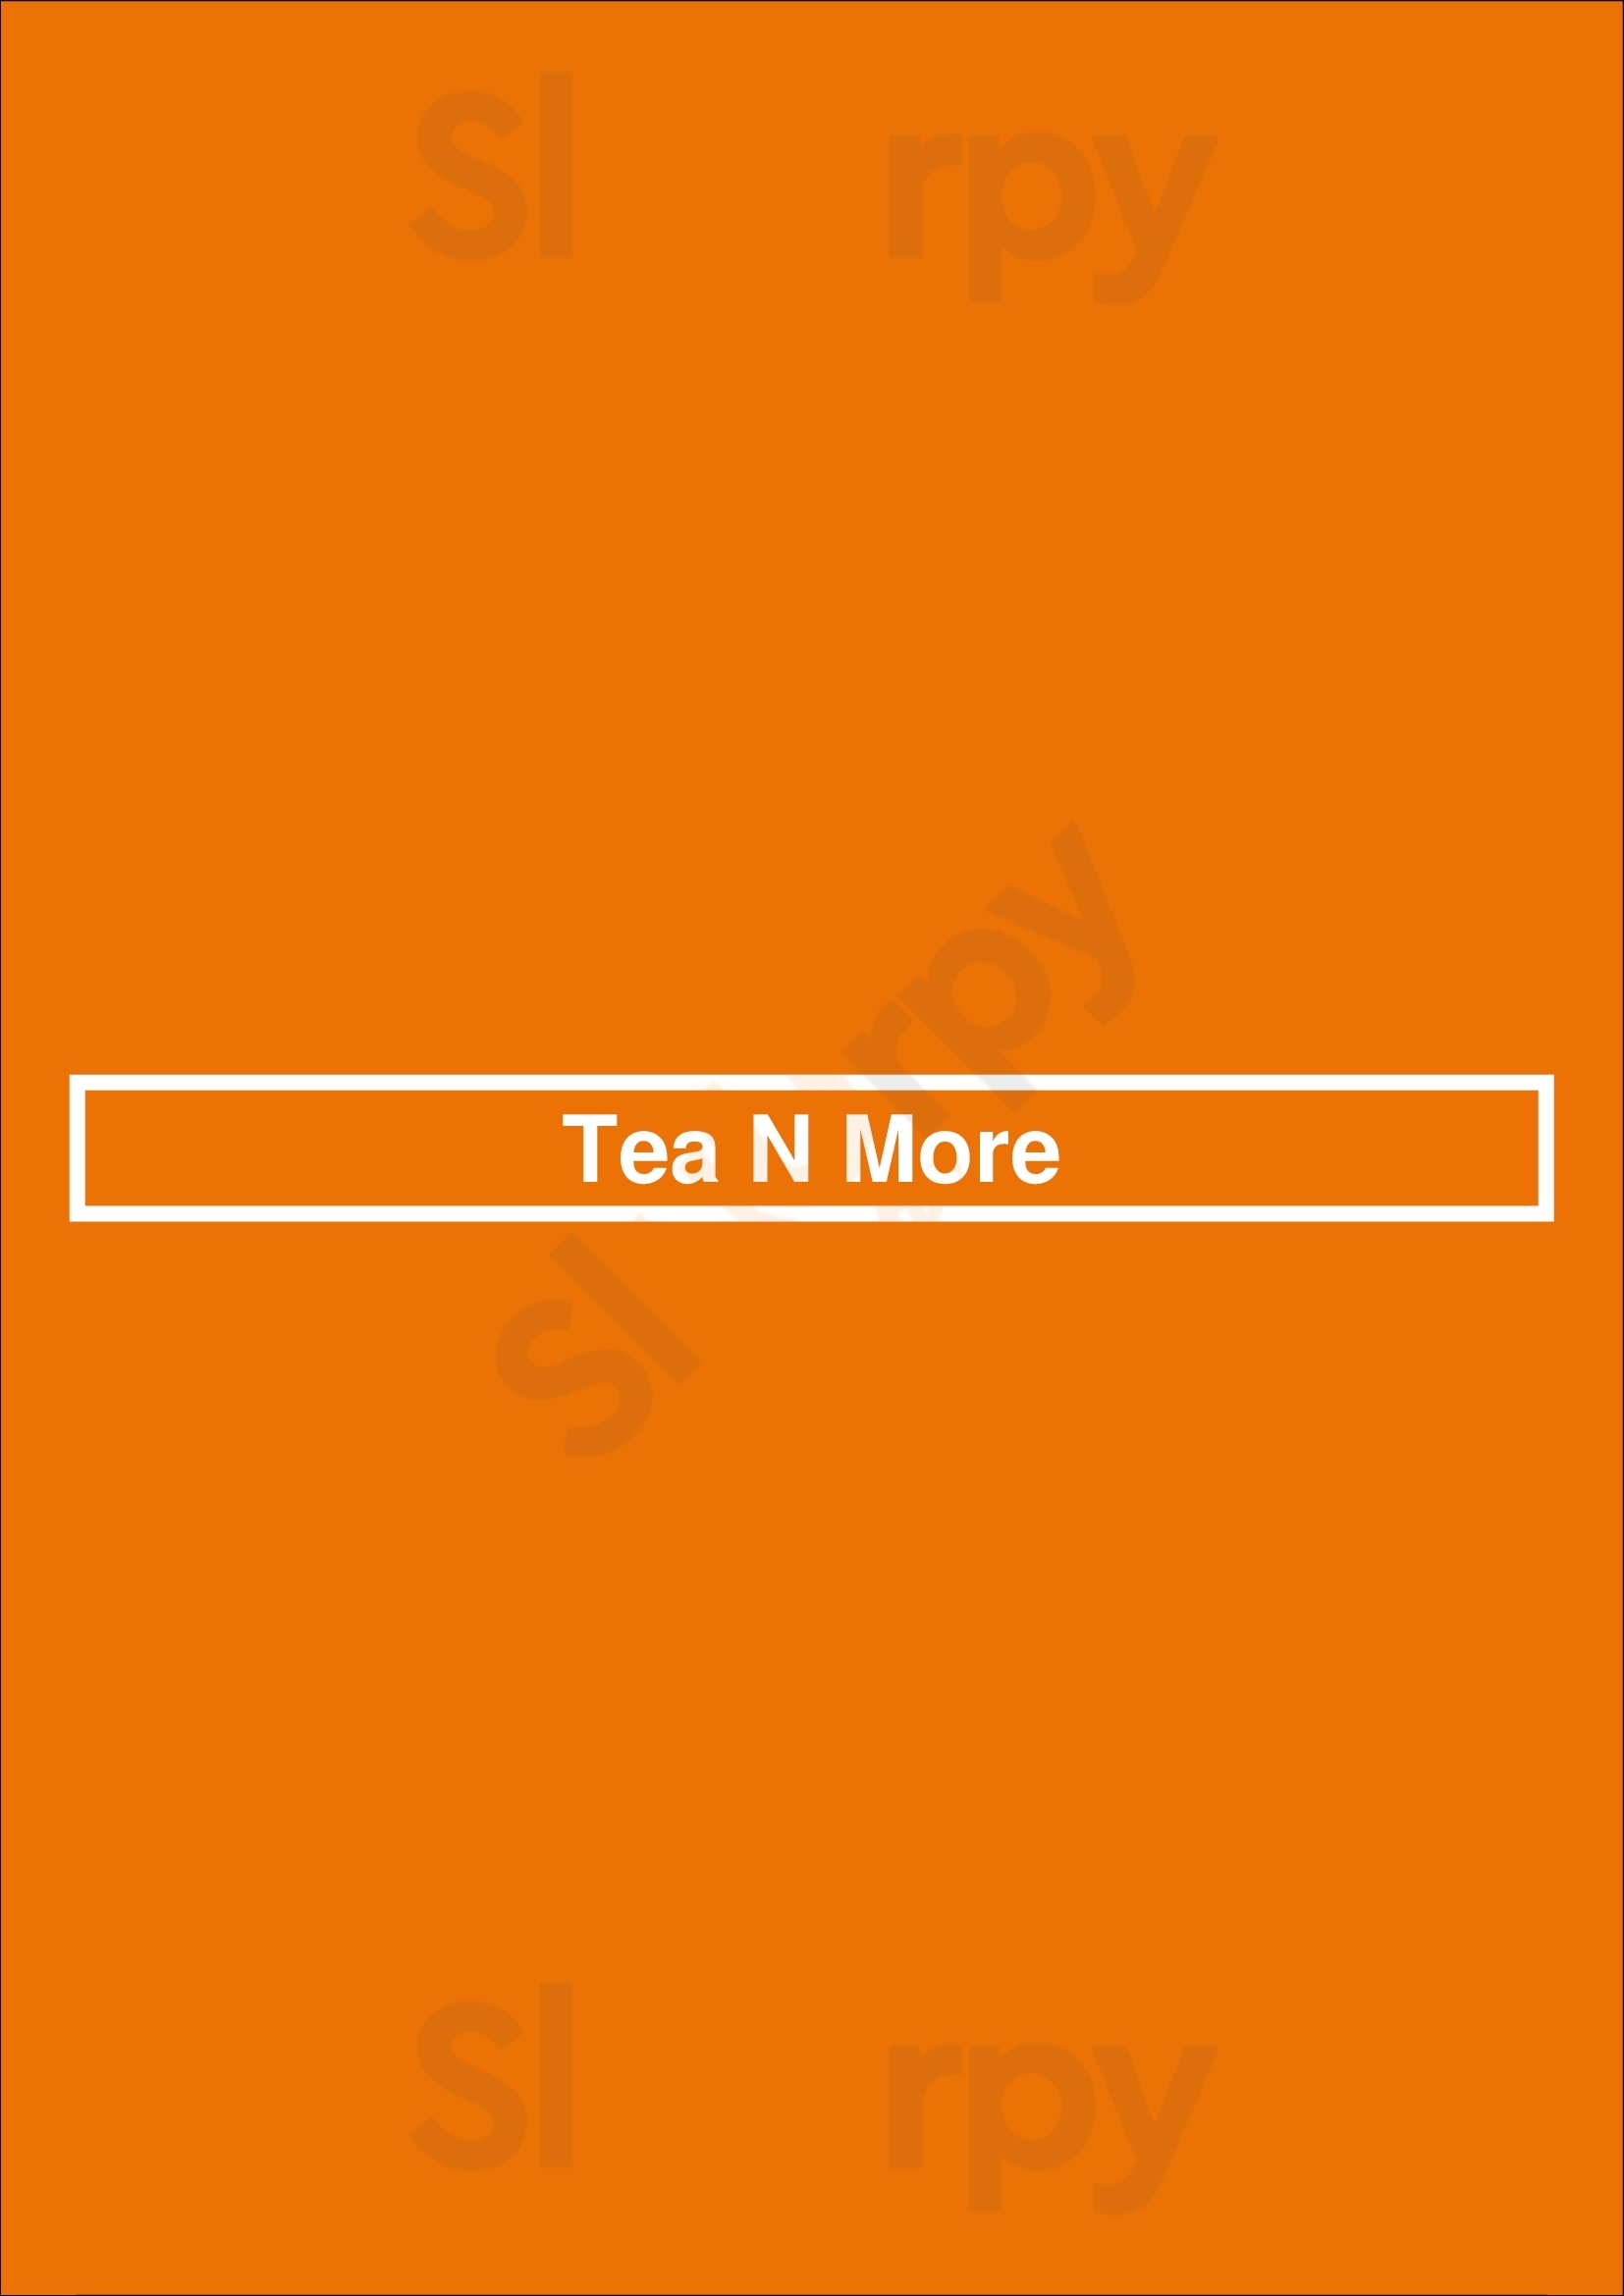 Tea N More La Jolla Menu - 1